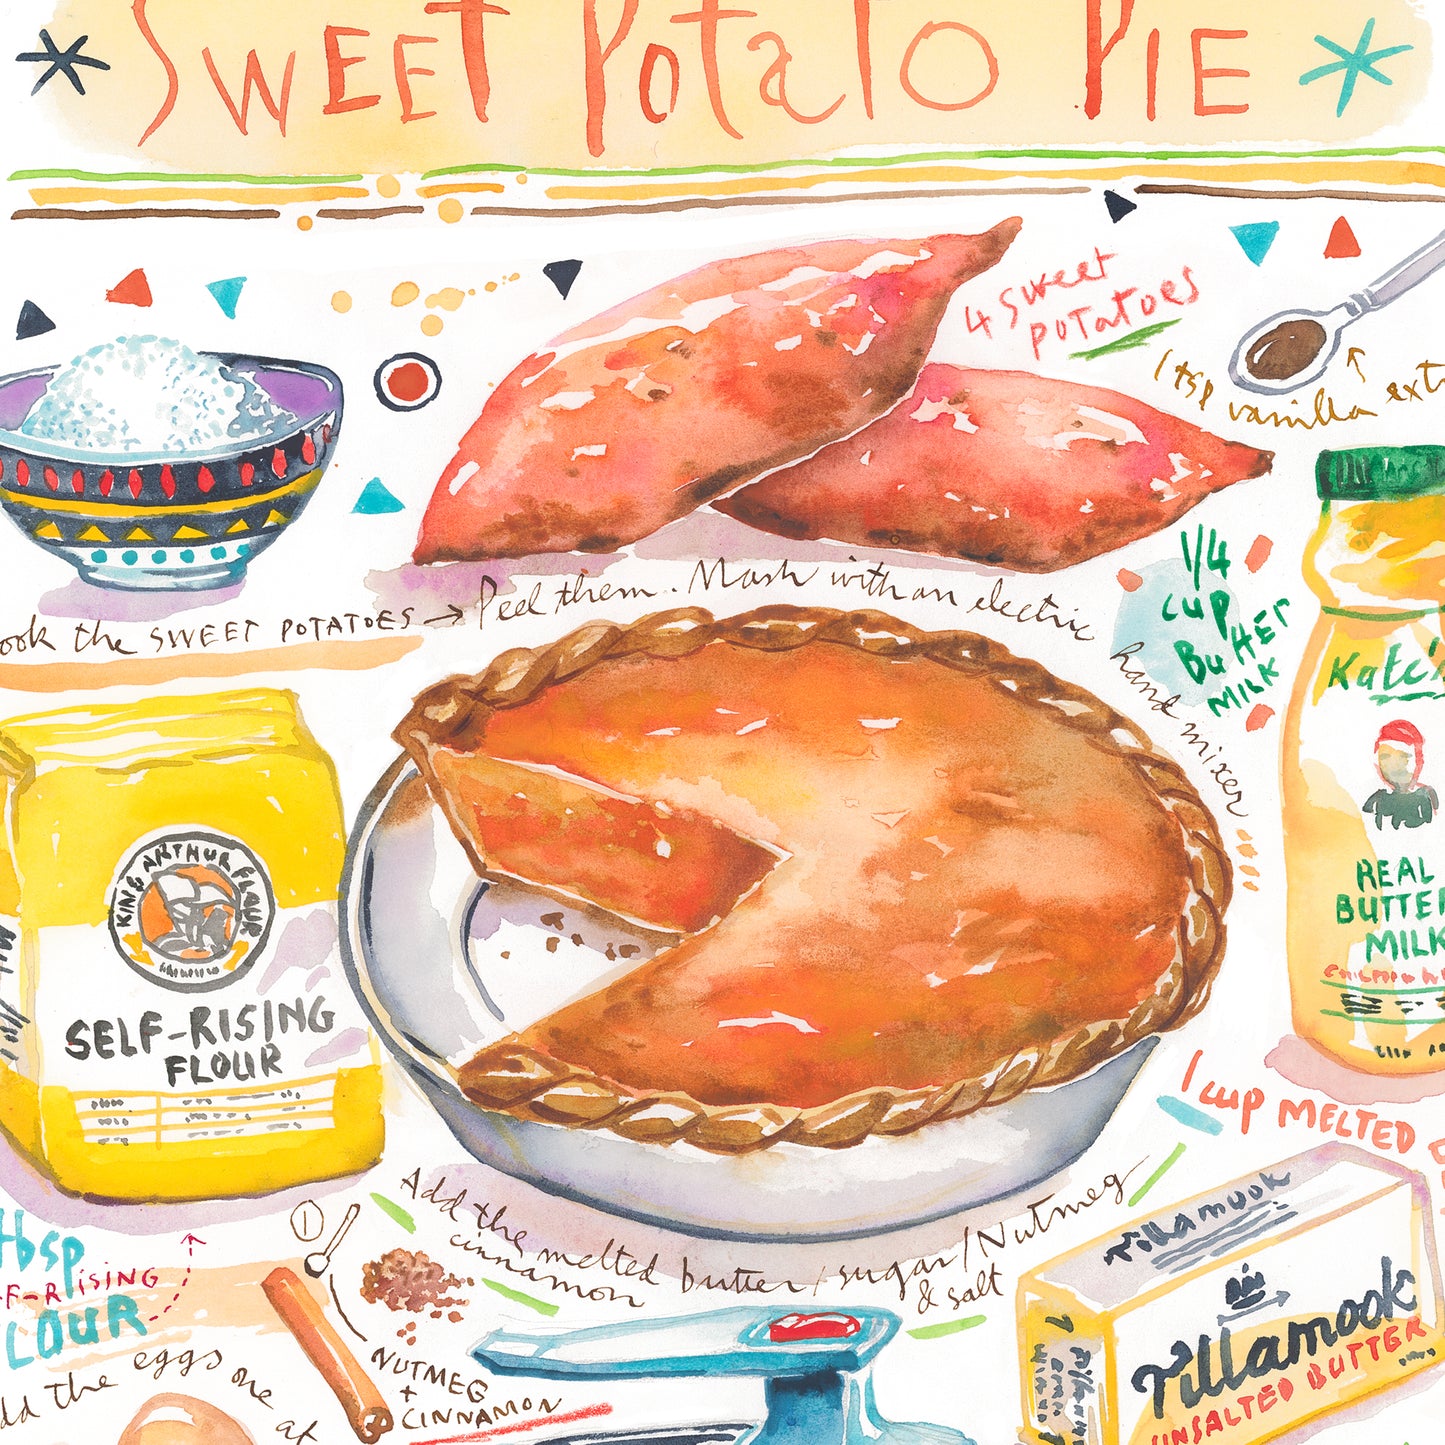 Sweet Potato Pie recipe